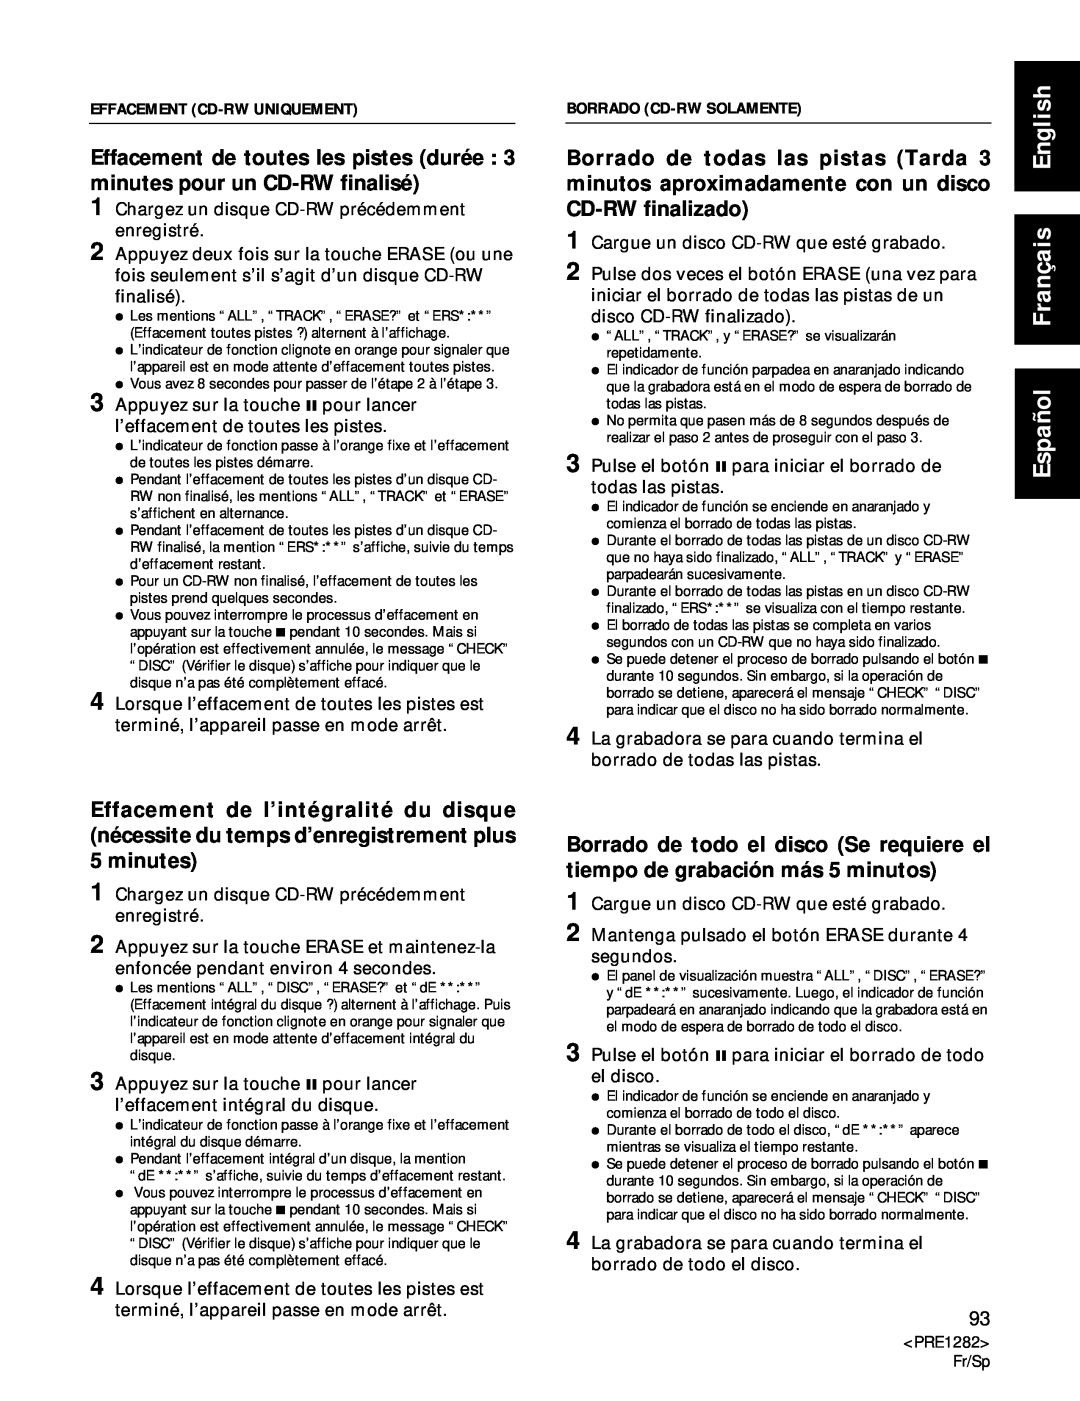 Americana Appliances CDR-850 manual Español Français English, Cargue un disco CD-RWque esté grabado 